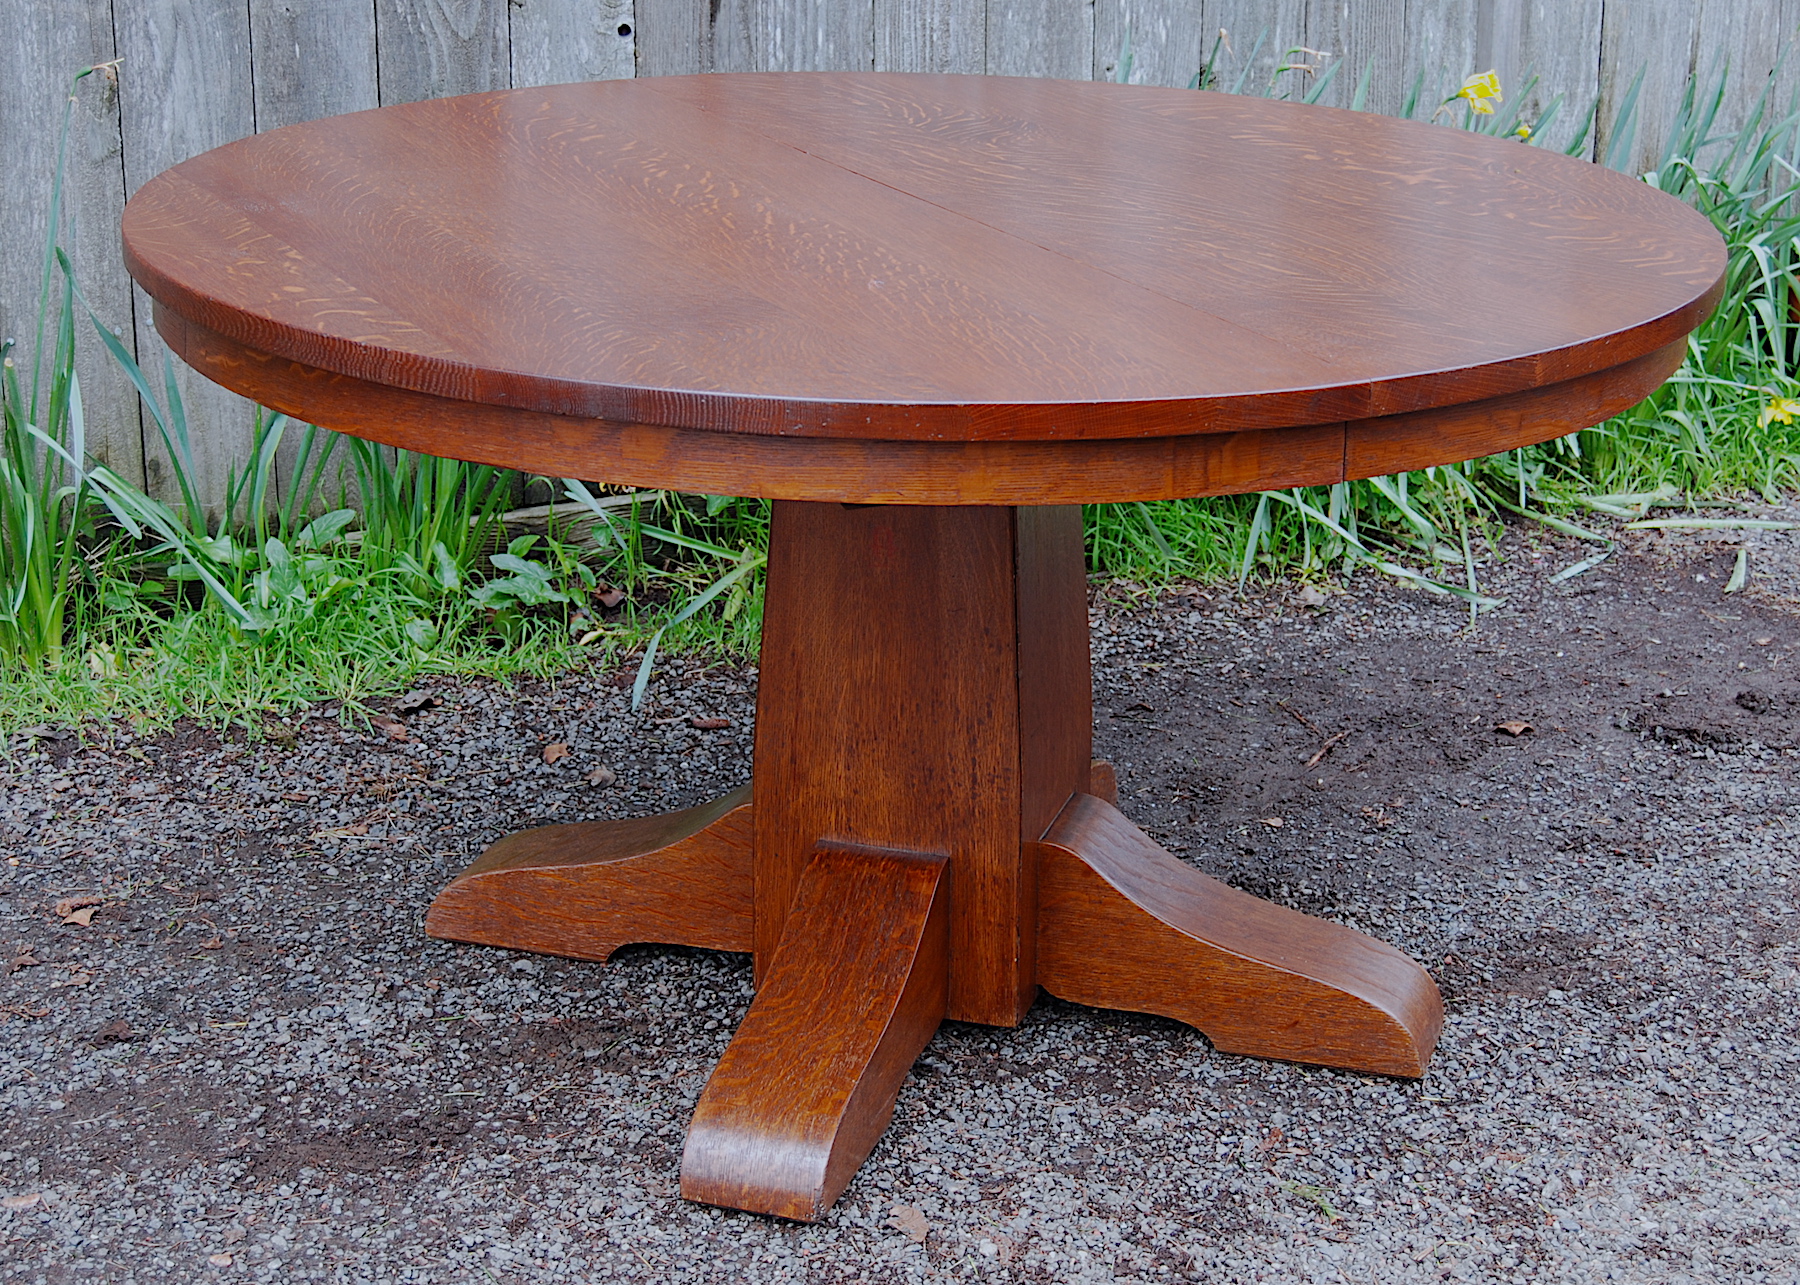 Voorhees Craftsman Mission Oak Furniture Gustav Stickley 54 Inch Pedestal Dining Table With 4 Leaves Signed